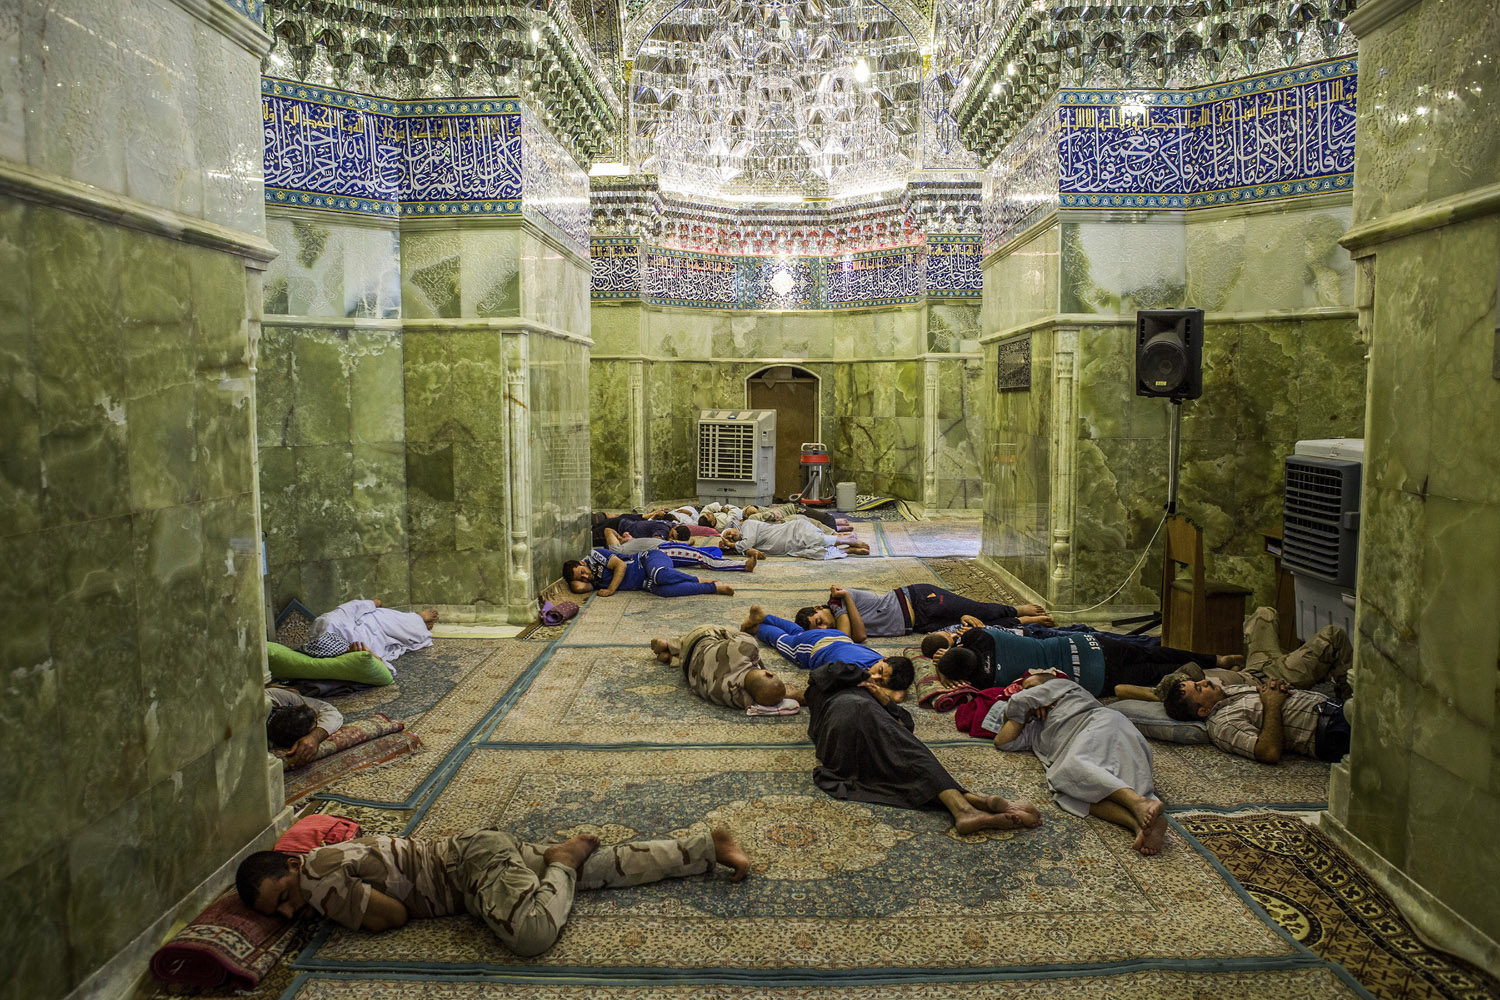 Jul. 5, 2014. Shiite volunteers sleep during the midday heat inside the Askariya Shrine, where two imams revered by Shiites are buried, in Samarra, Iraq.